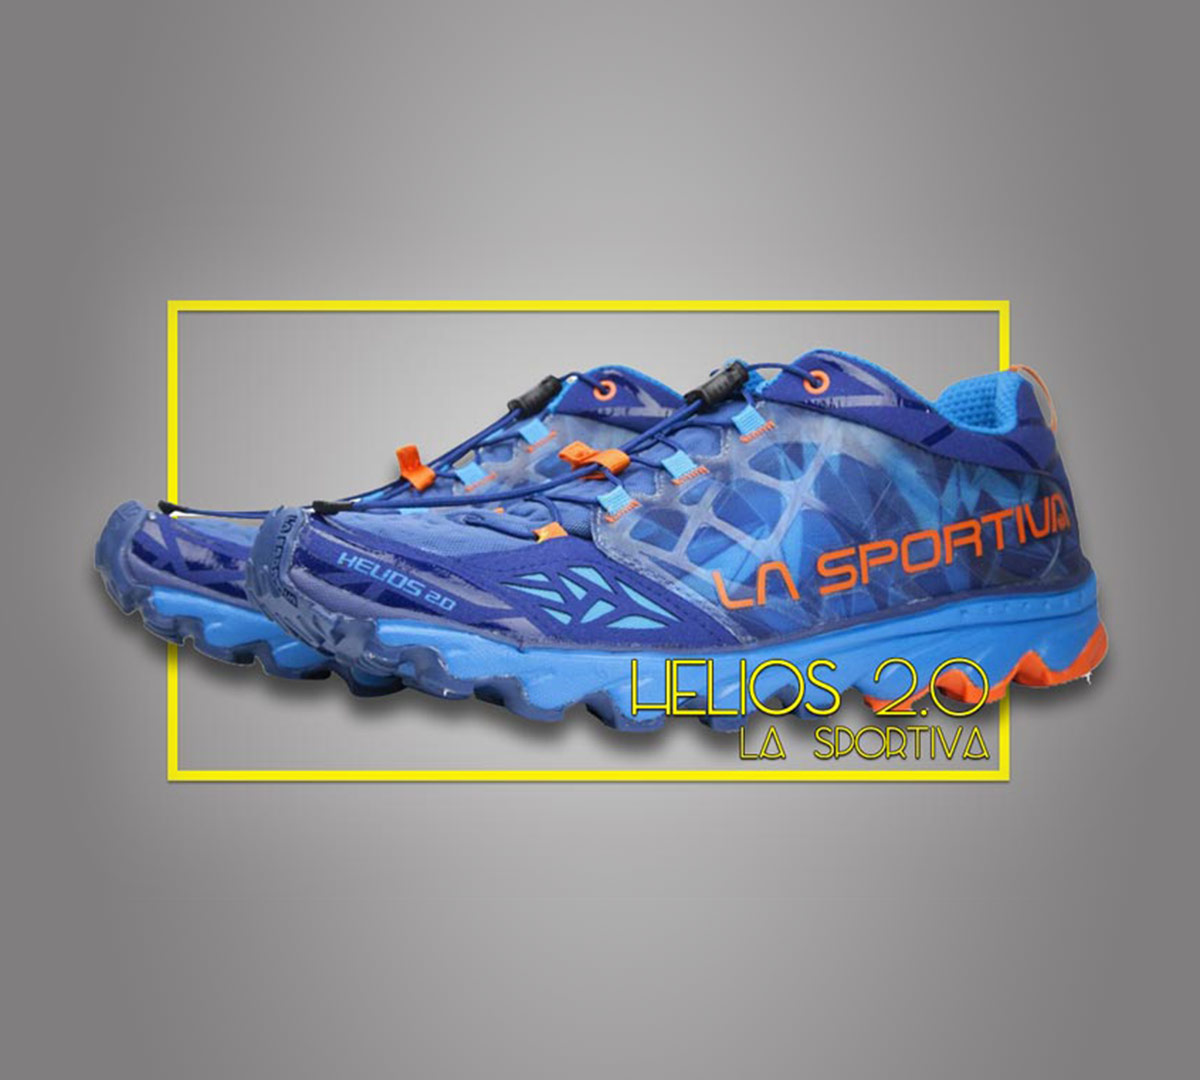 La Sportiva Helios 2.0 ultraleichte Schuhe Sportschuhe Halbschuhe Joggingschuhe 